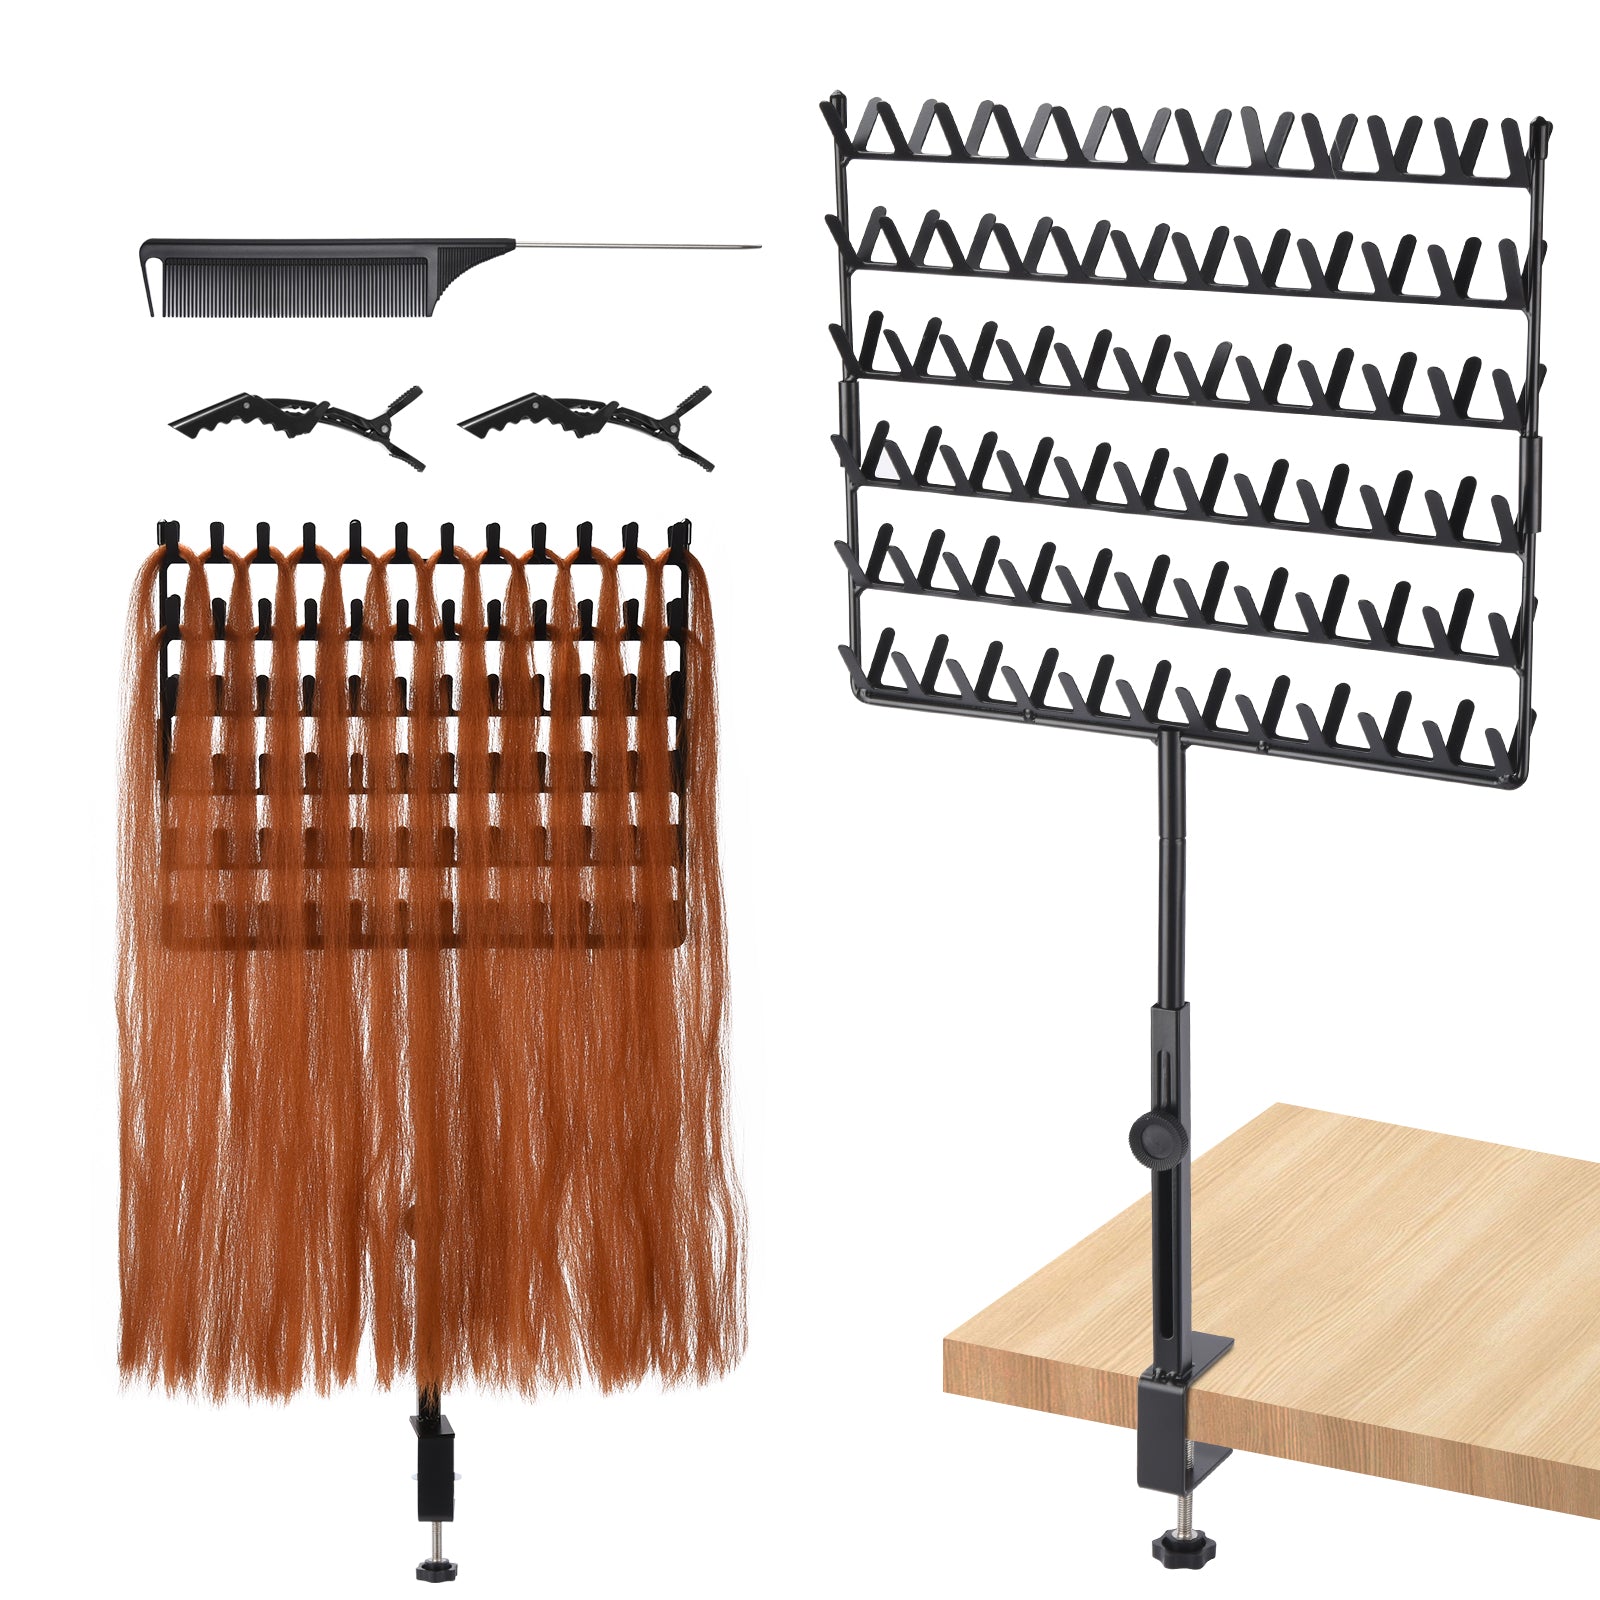 GADFISH Braiding Hair Rack Desktop, 144 Pegs Height Adjustable Braiding Rack for Hair, 360° Rotation Hair Extension Holder, Hair Rack for Hair Braider with Braiding Hair Supplies